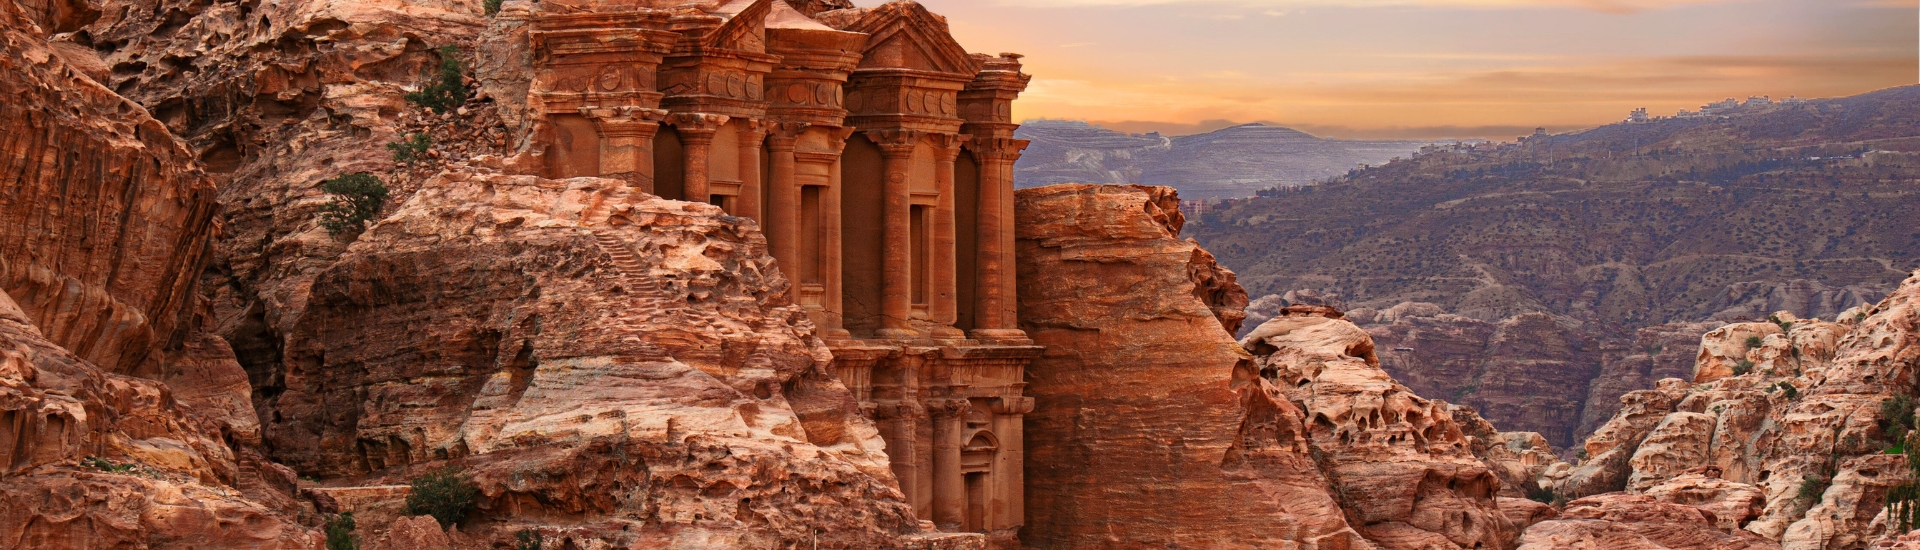 Ad Deir, the Monastery of Petra in Jordan